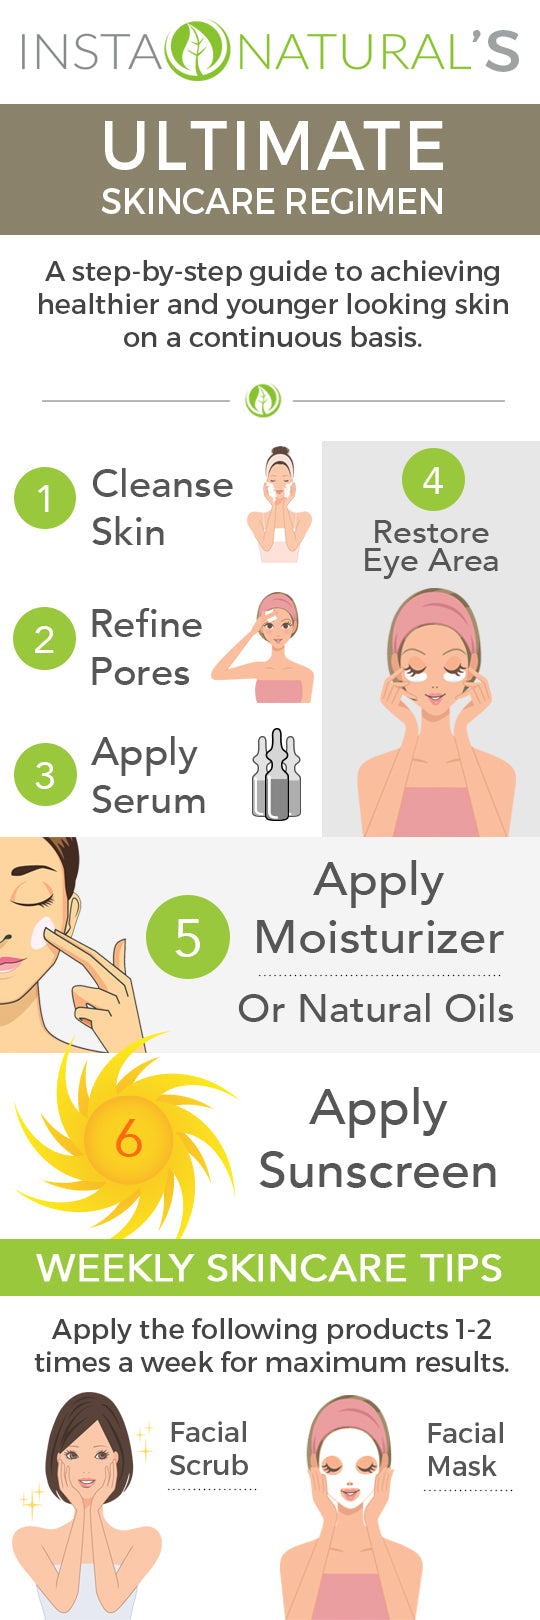 InstaNatural Ultimate Skin Care Regimen Guide Infographic